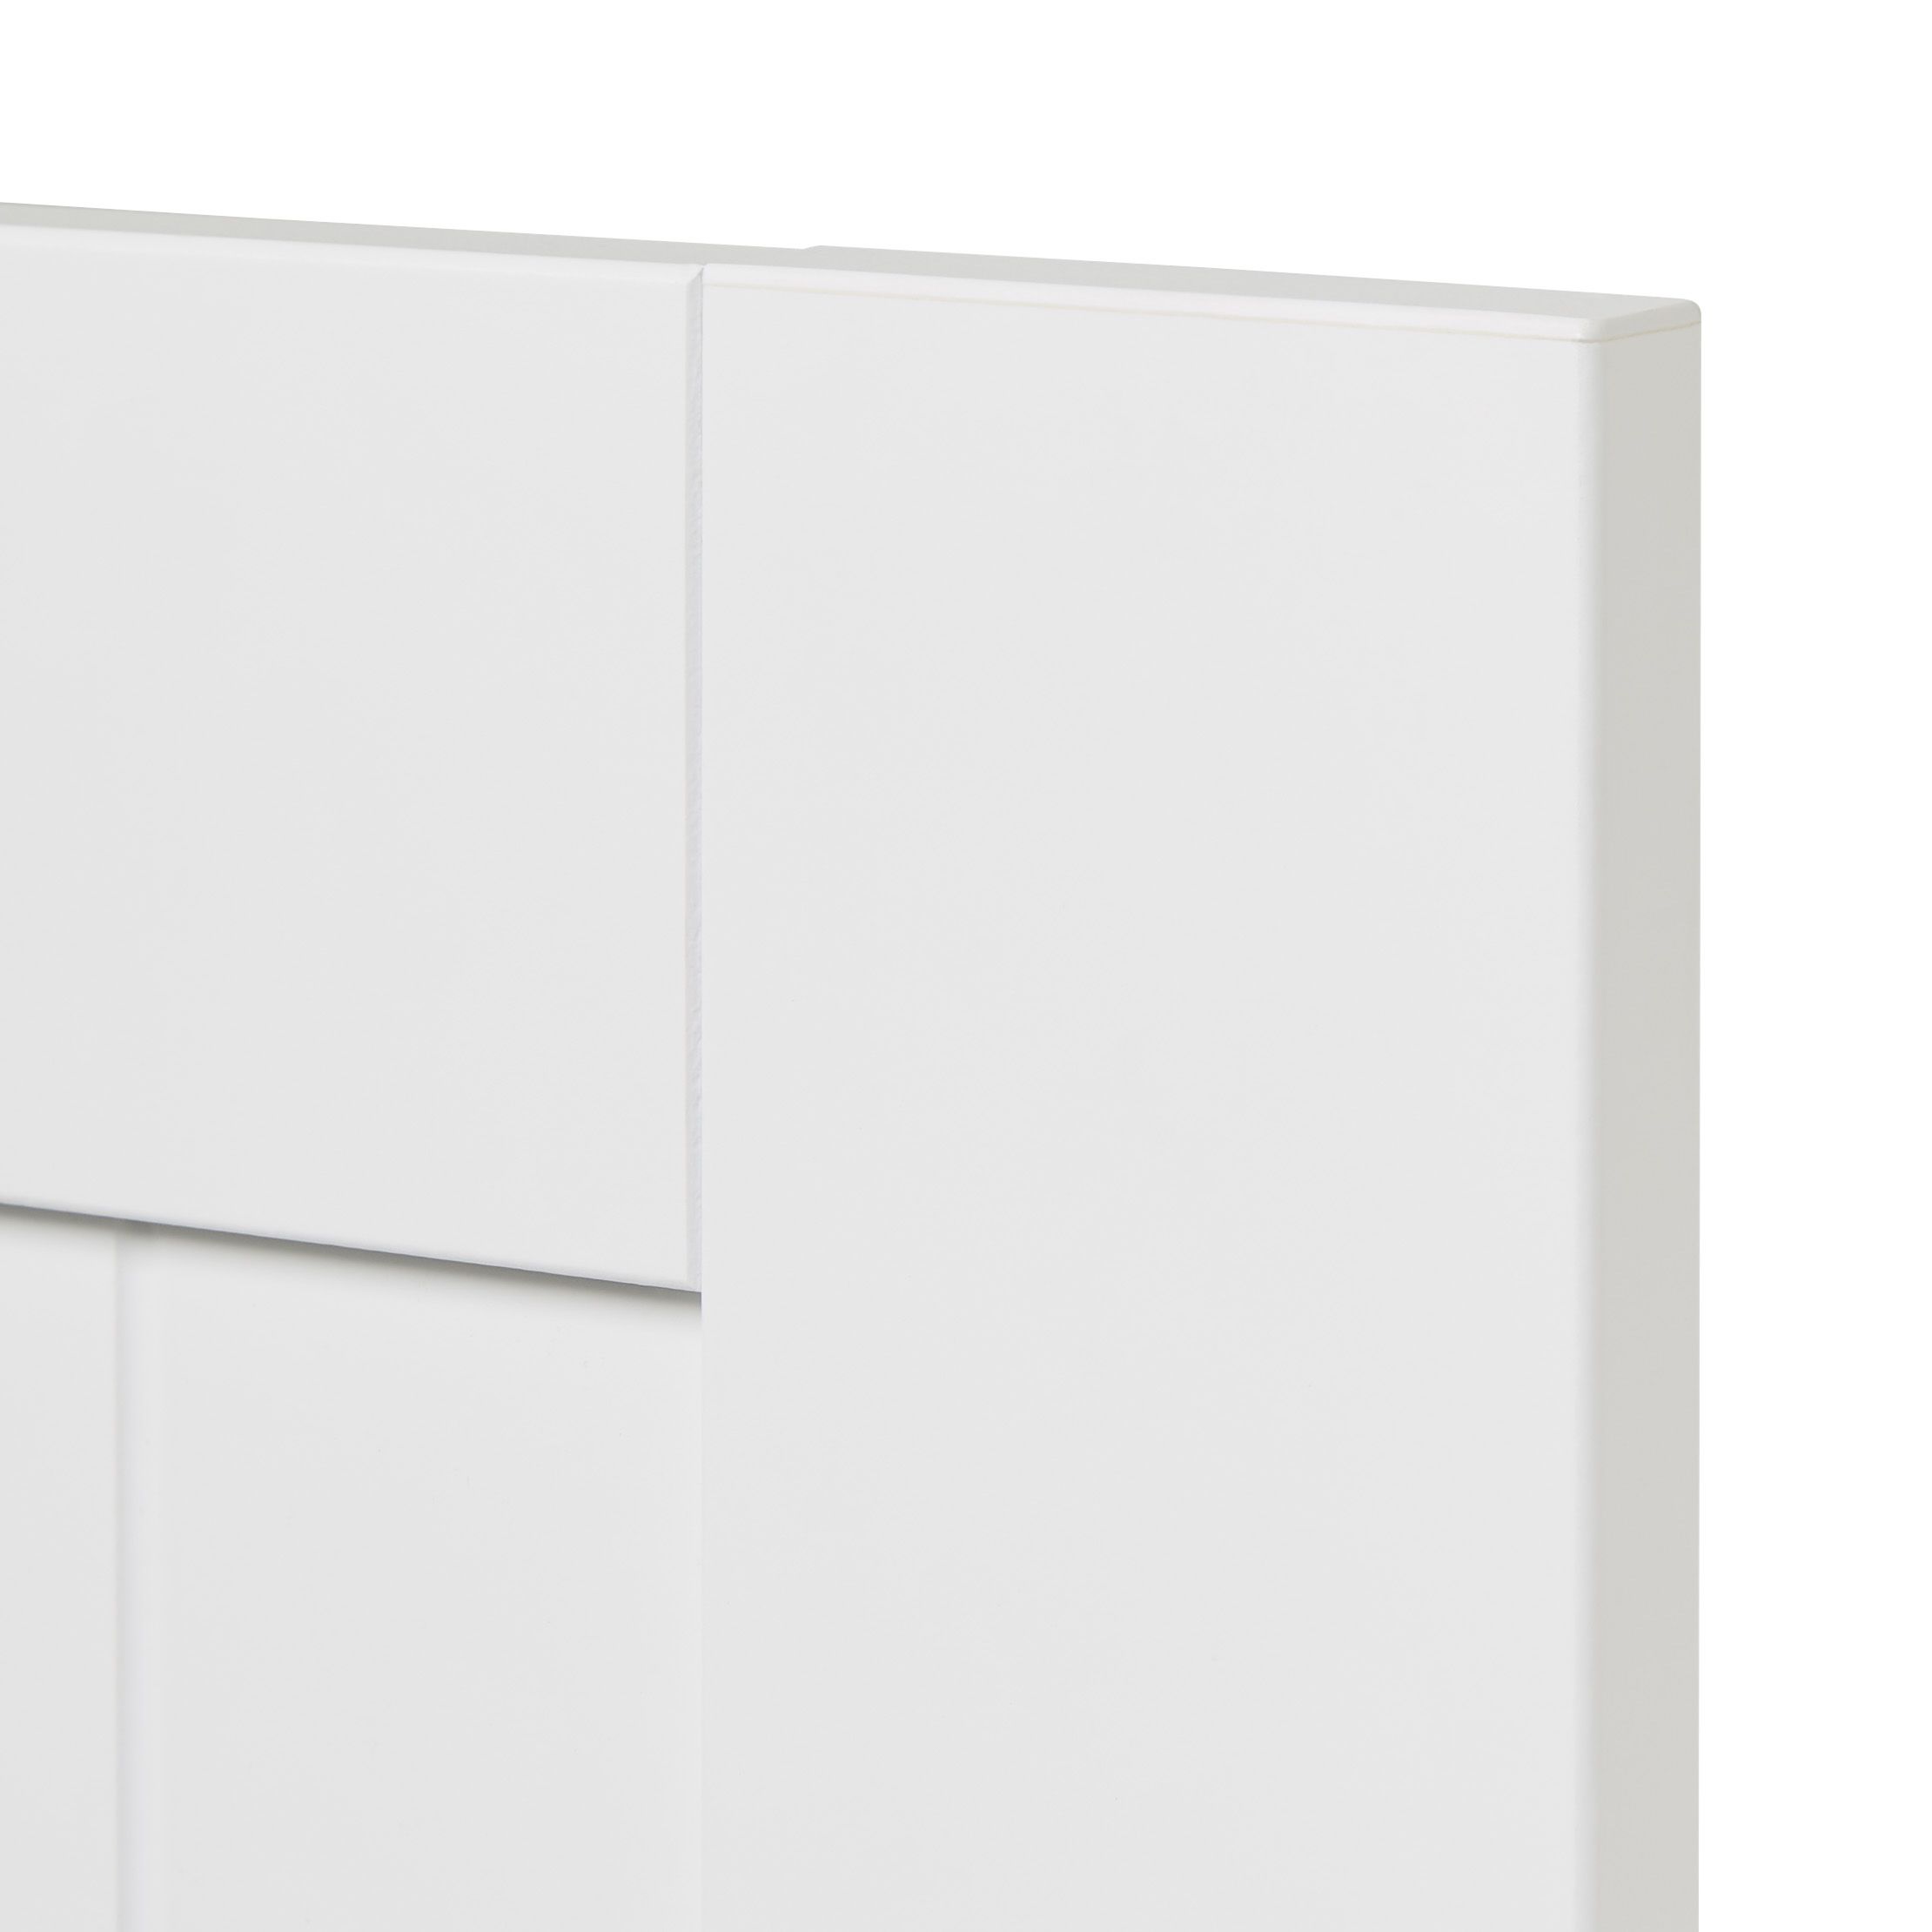 GoodHome Alpinia Matt white tongue & groove shaker Highline Cabinet door (W)250mm (H)715mm (T)18mm